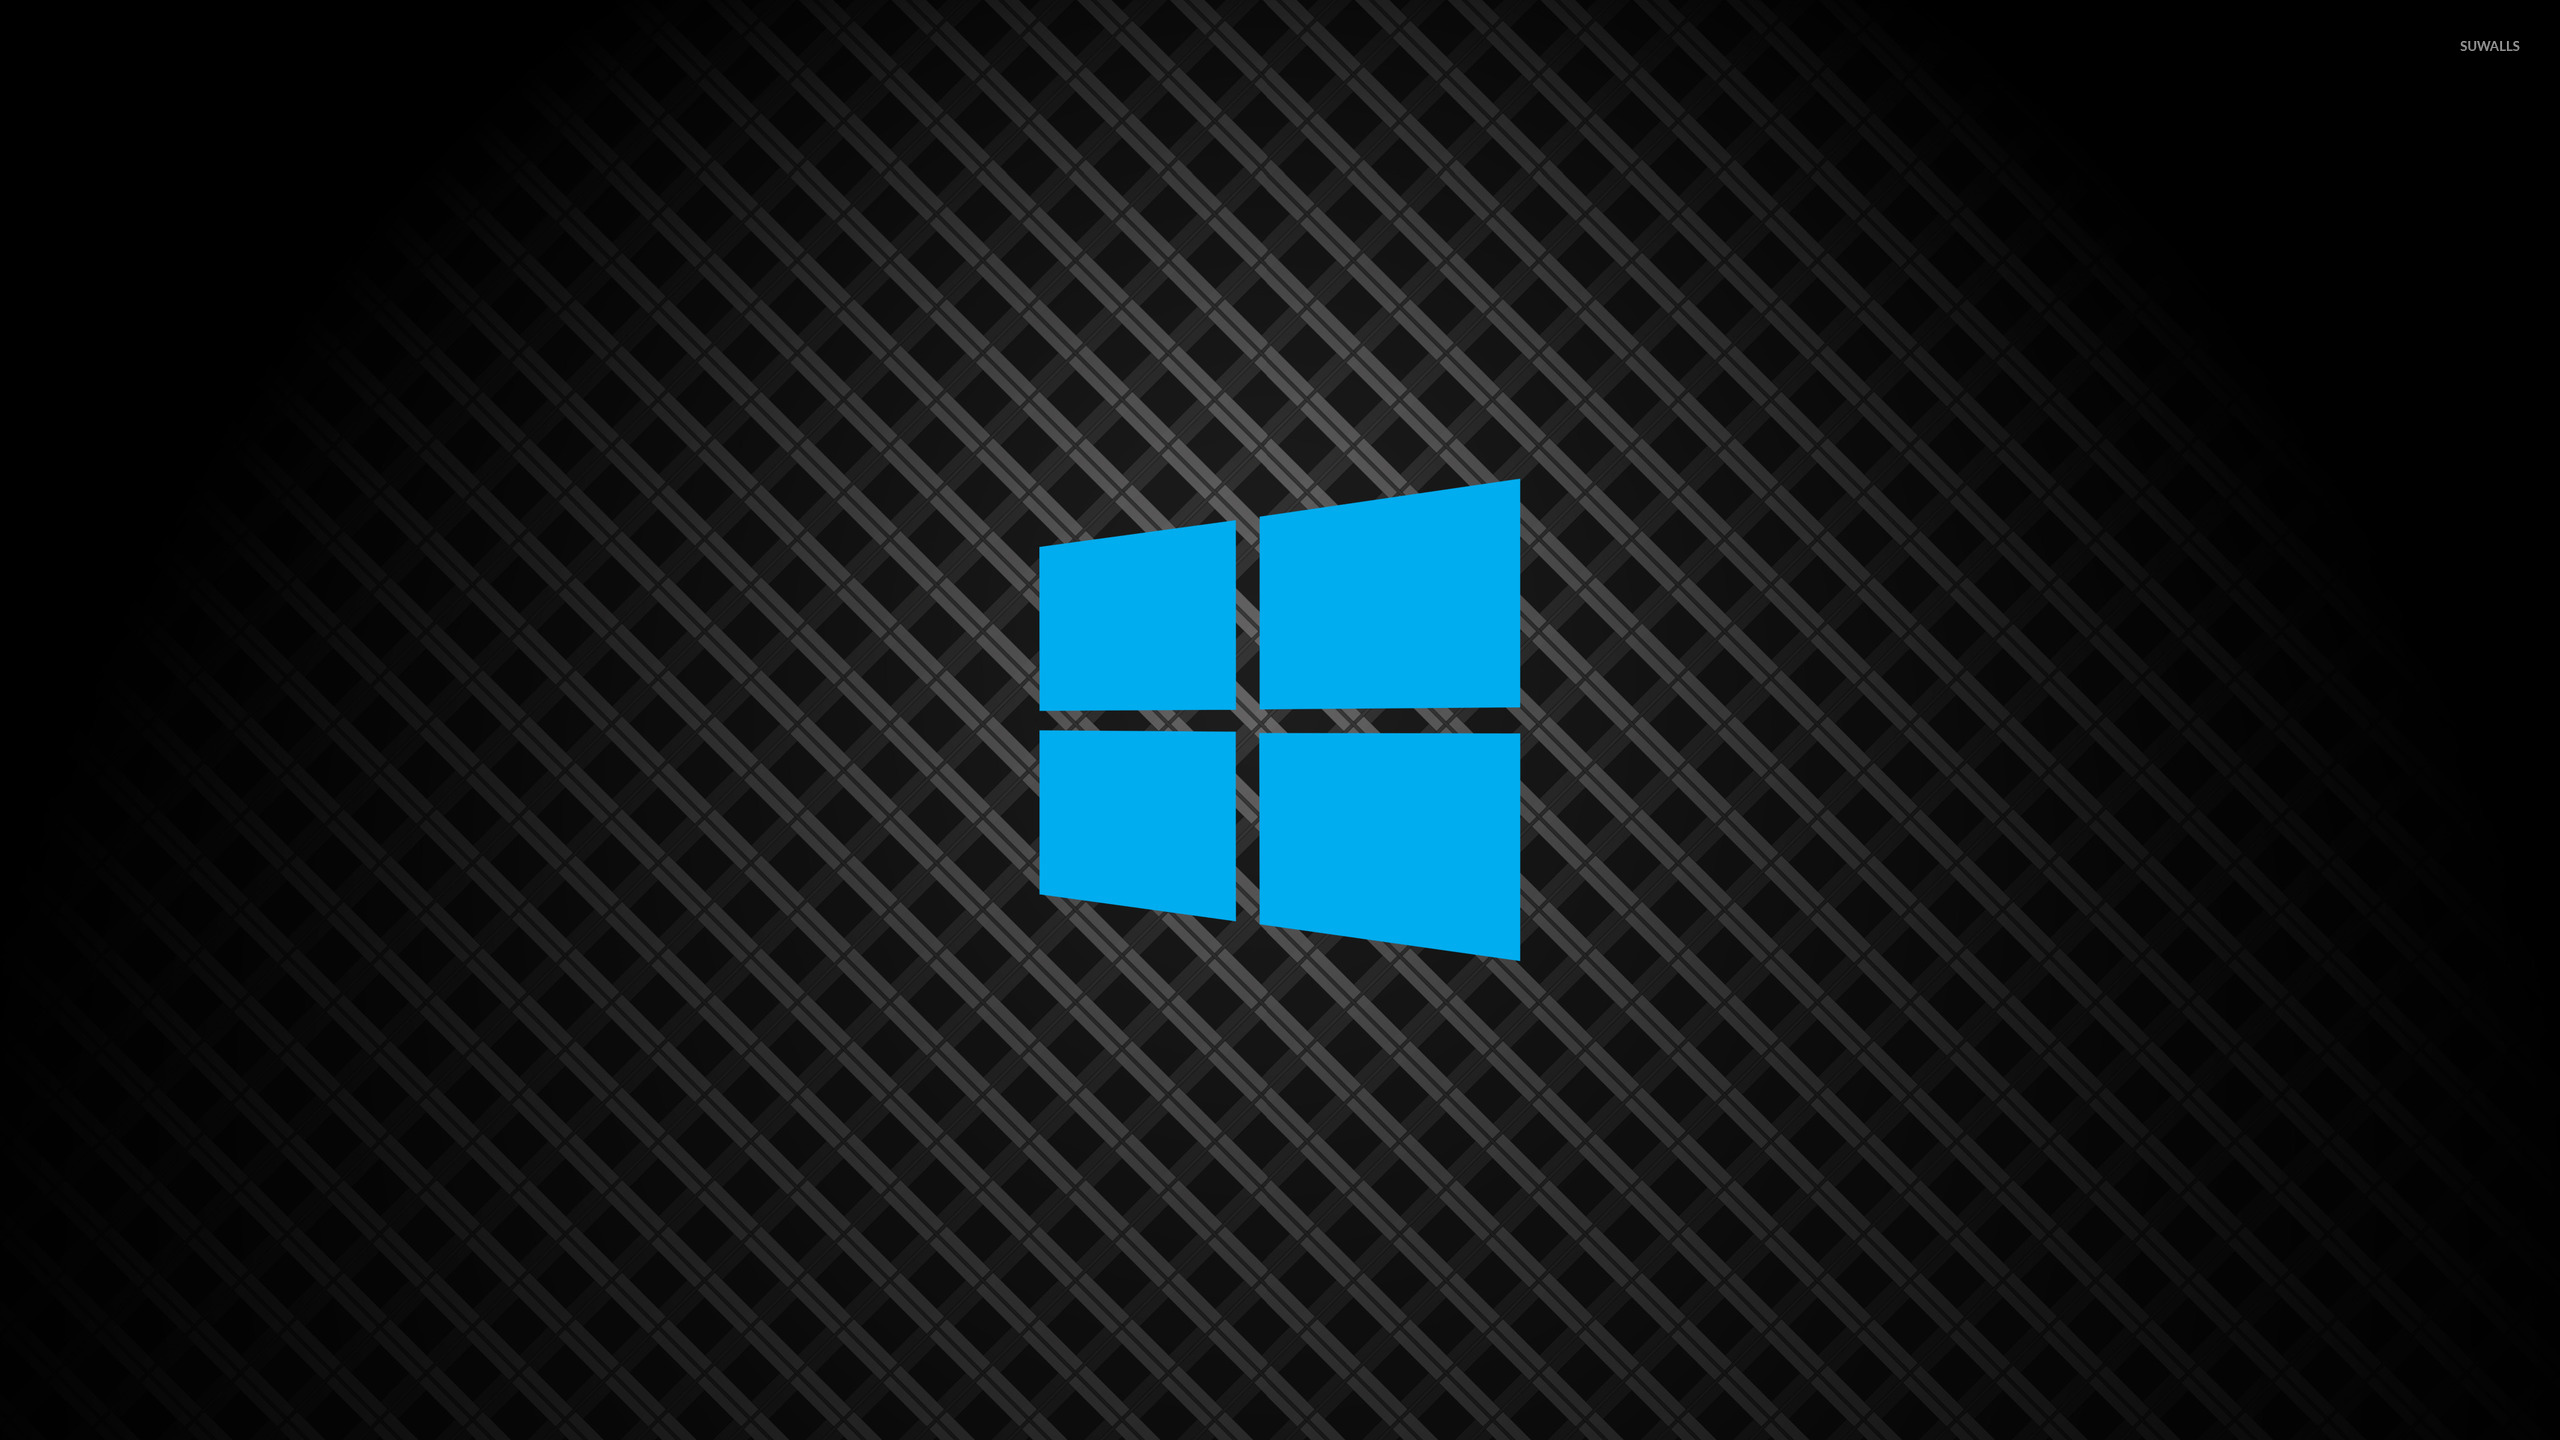 Windows 10 on square pattern simple blue logo wallpaper - Computer ...